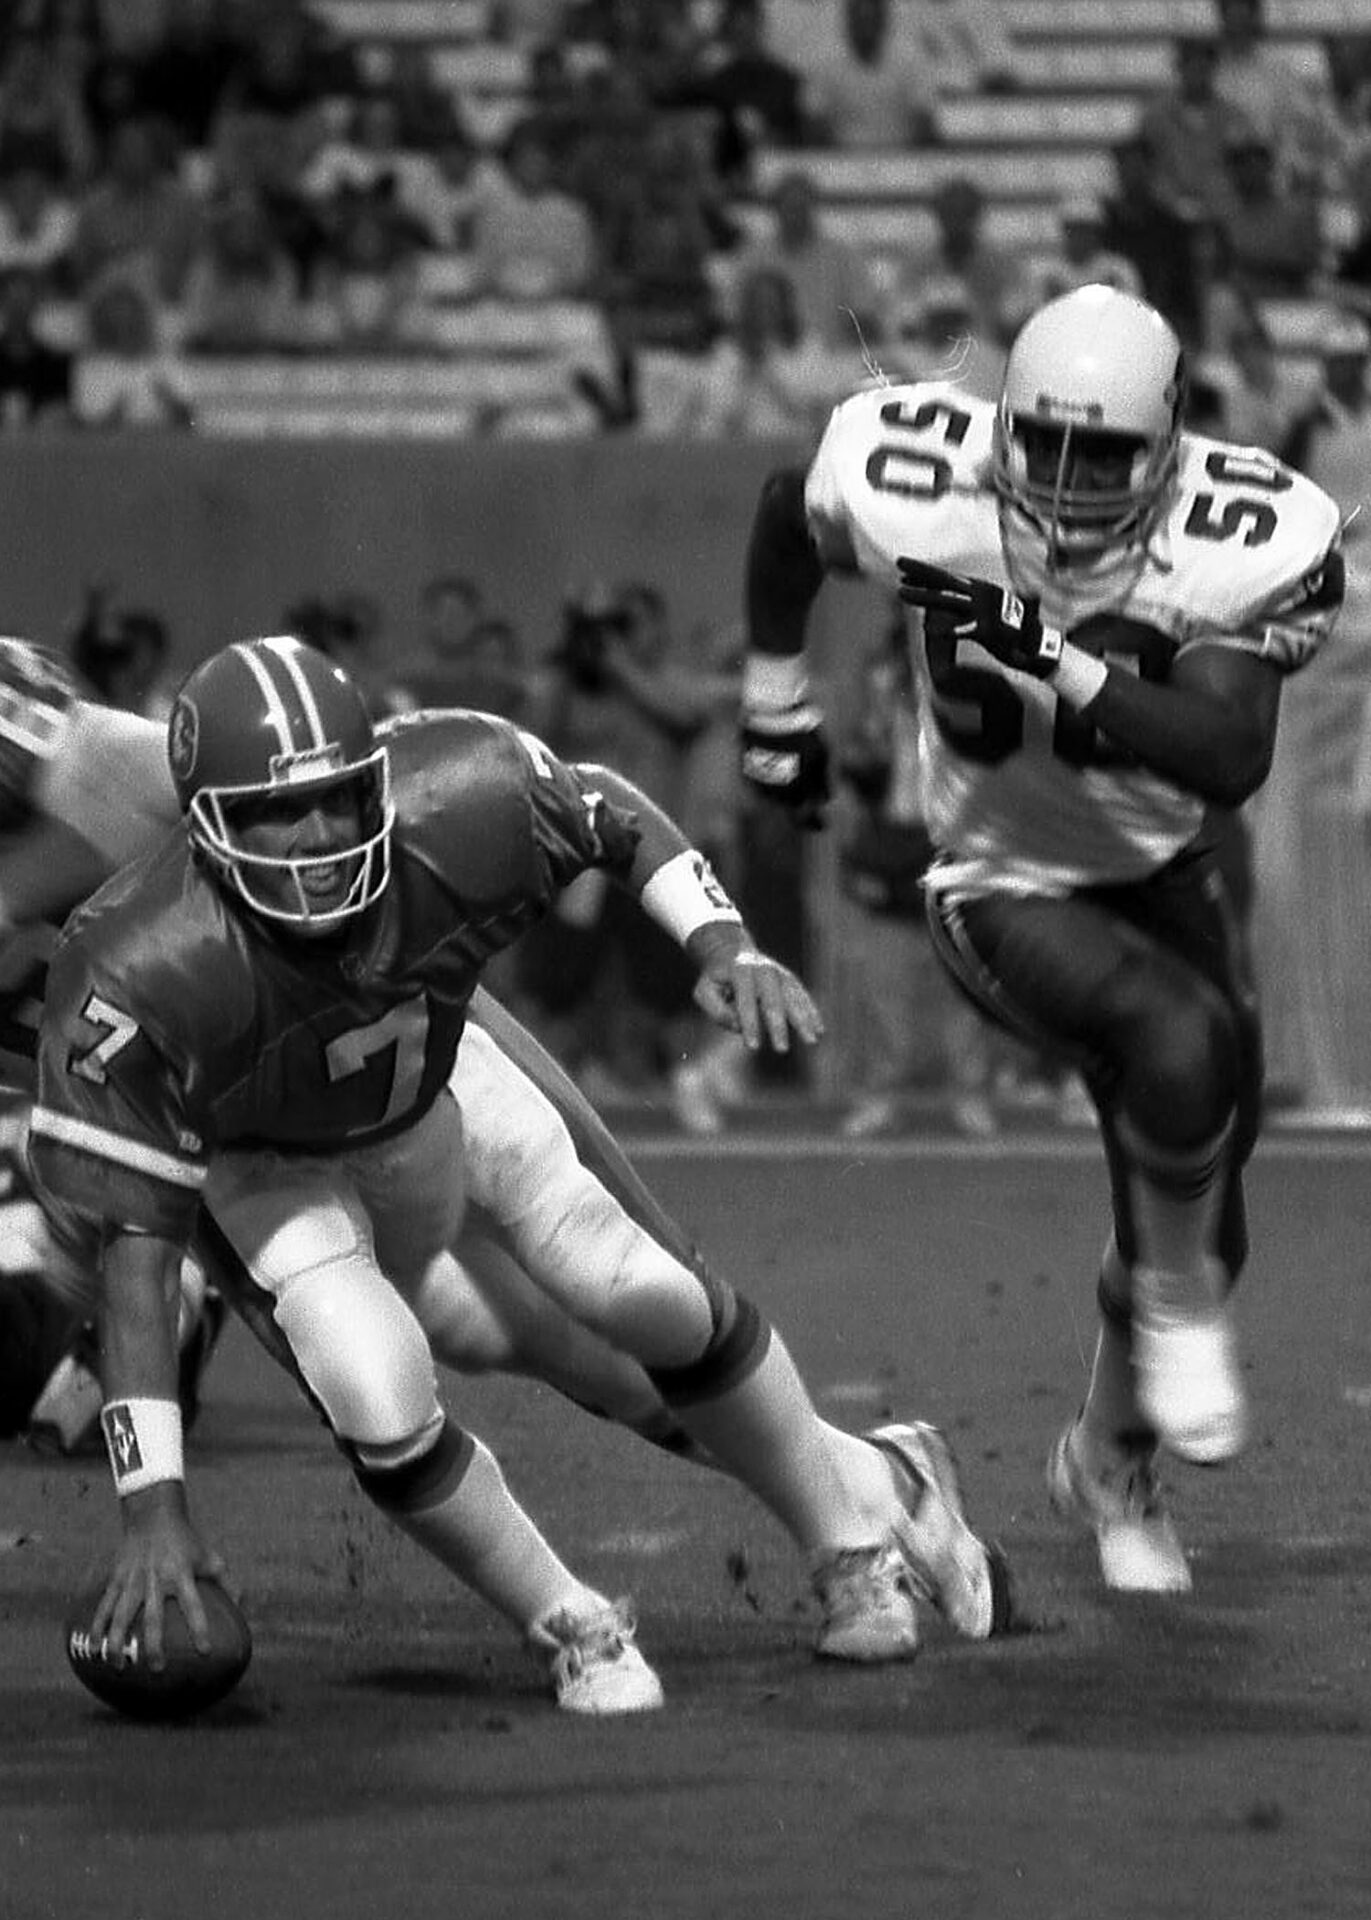 Denver Broncos quarterback John Elway eludes pressure during a 1993 preseason game against the Arizona Cardinals at Sun Devil Stadium in Tempe, AZ. (Photo by Richard Paolinelli)